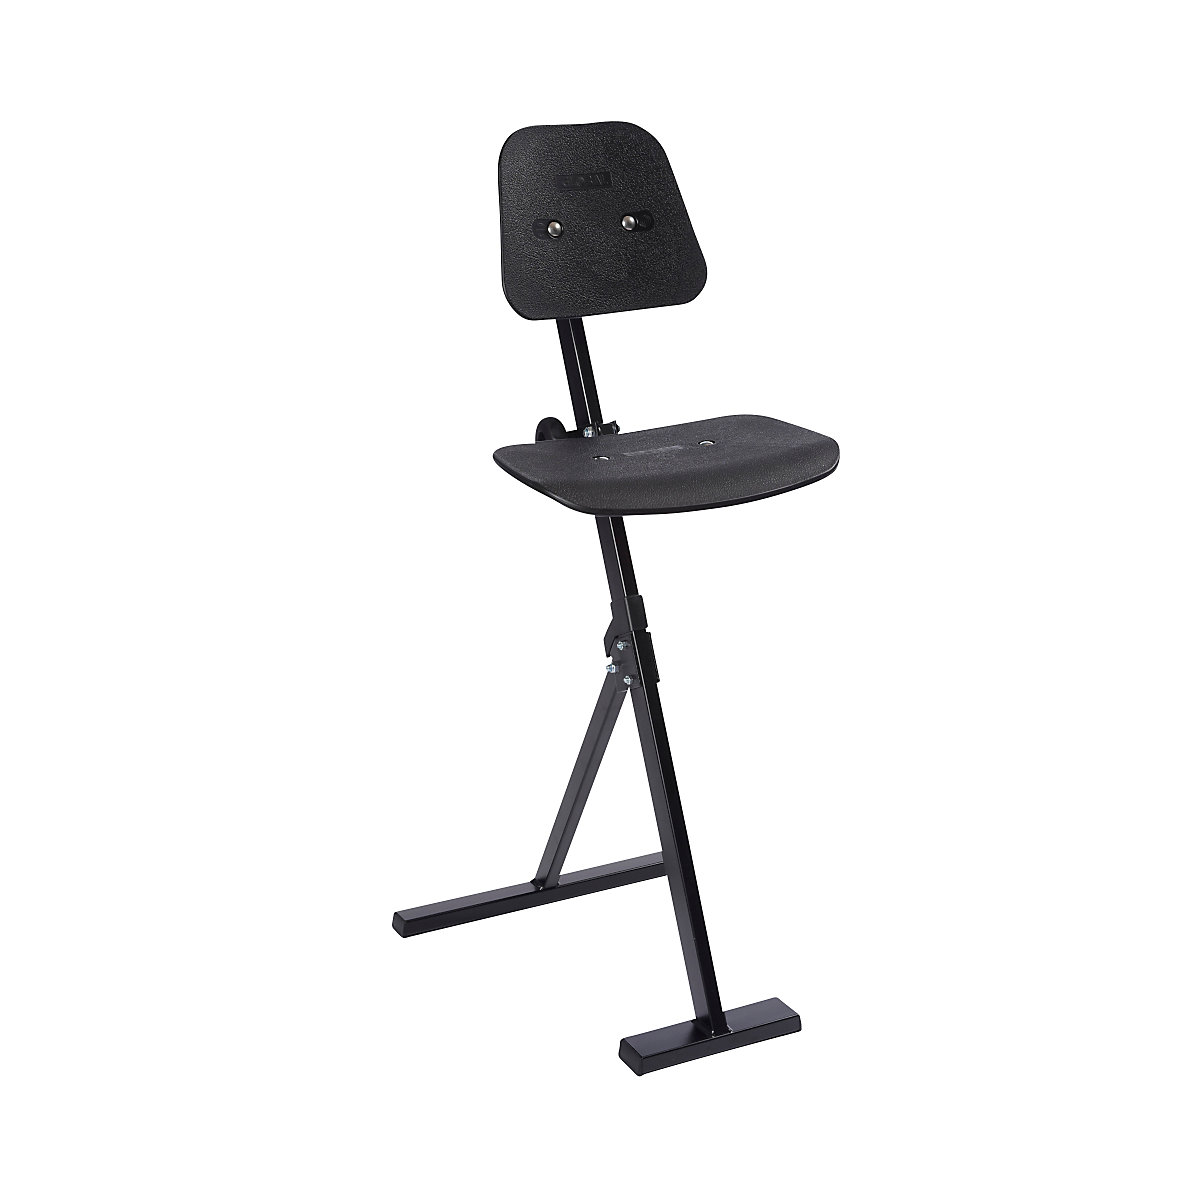 Anti-fatigue stool